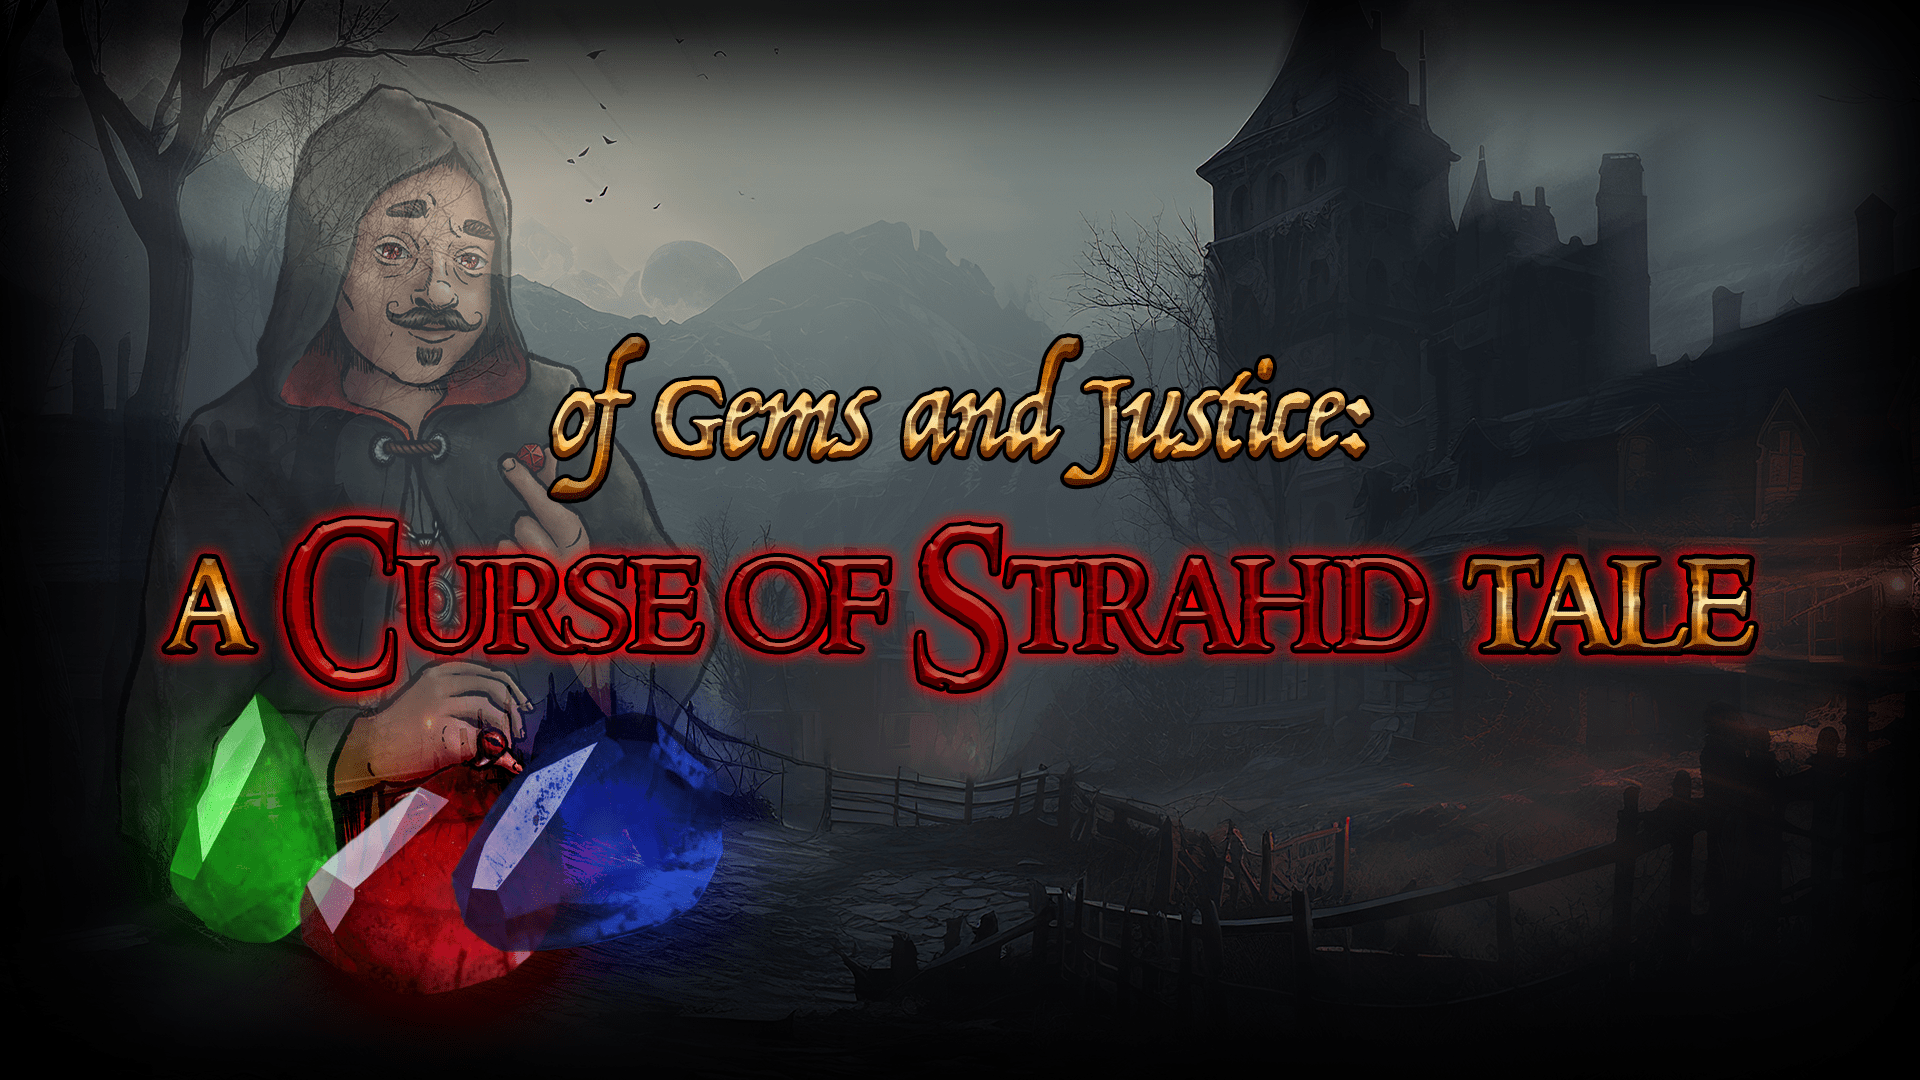 Curse of Strahd (Dungeons & Dragons)